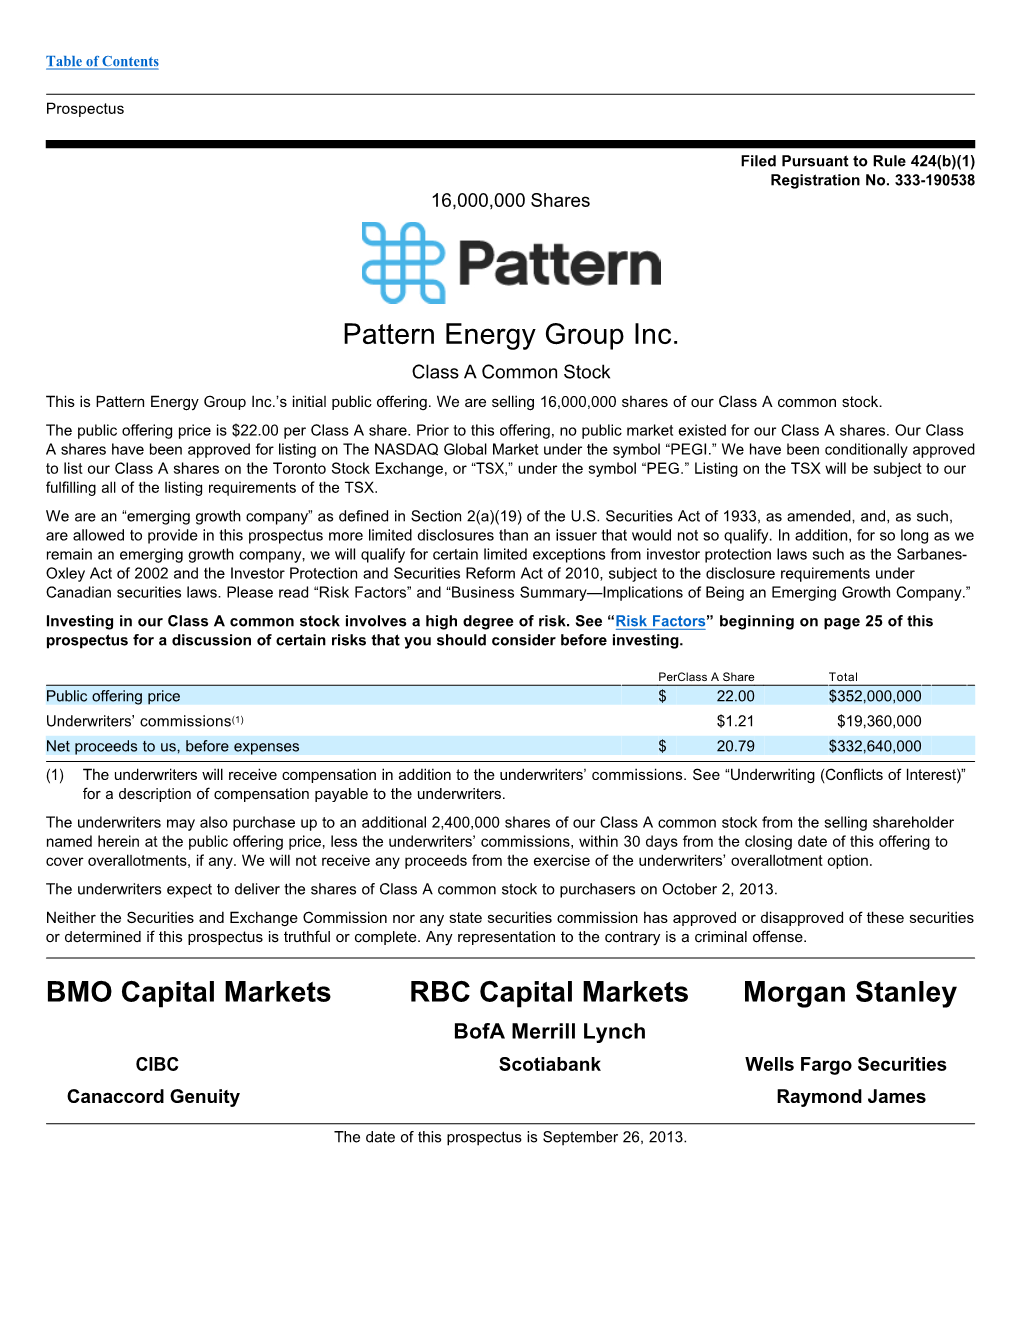 Pattern Energy Group Inc. BMO Capital Markets RBC Capital